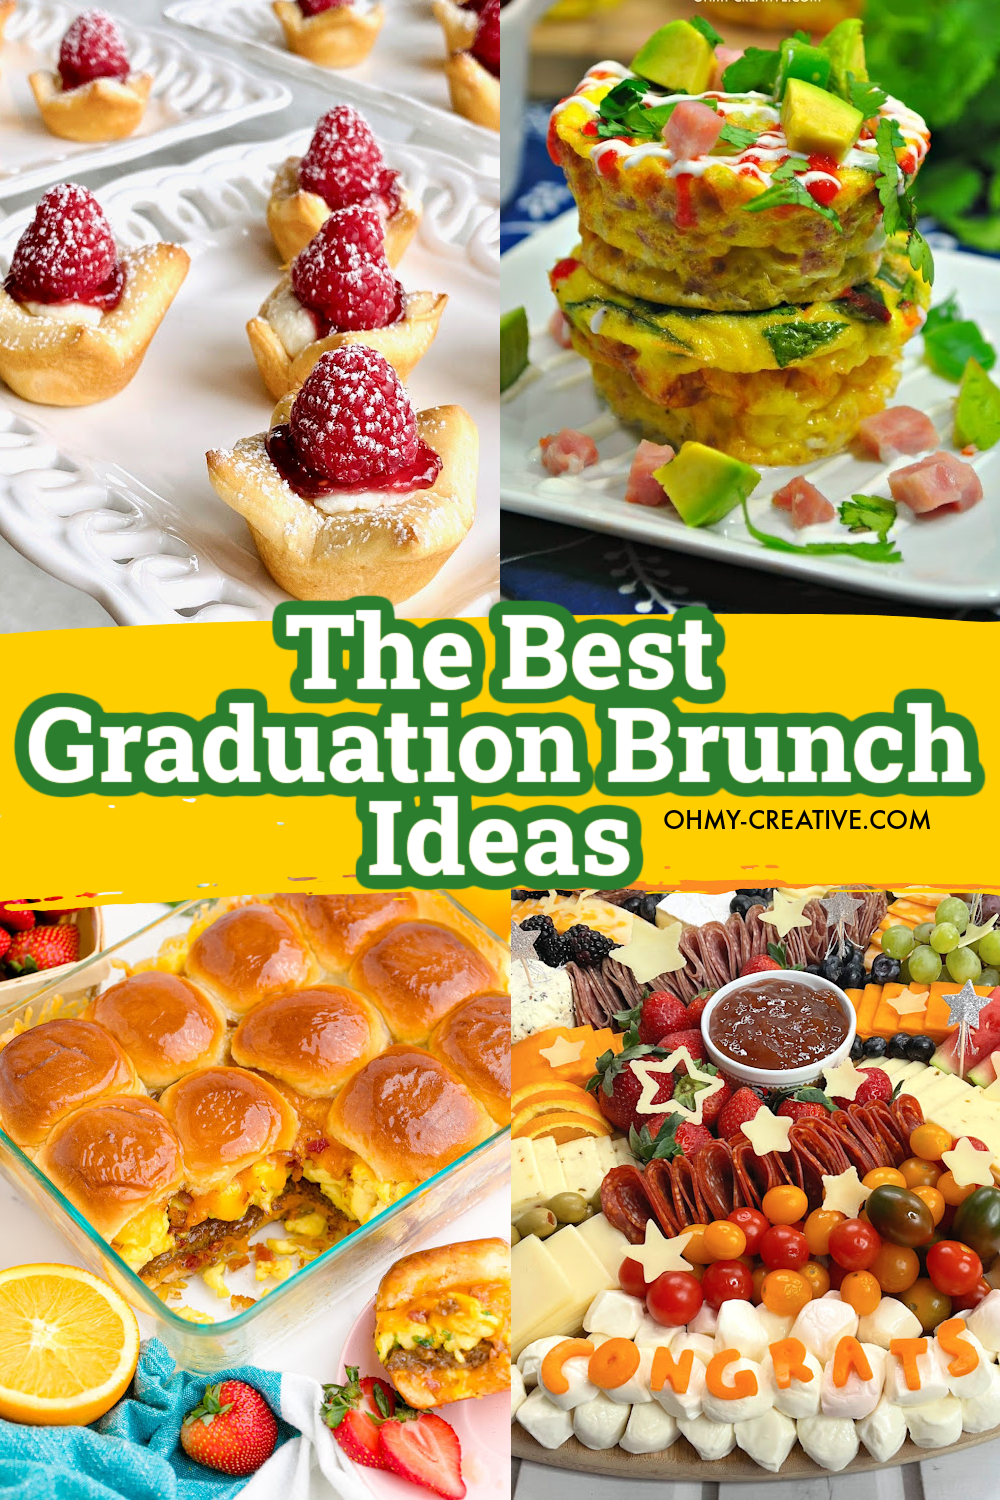 The Best Graduation Brunch Ideas